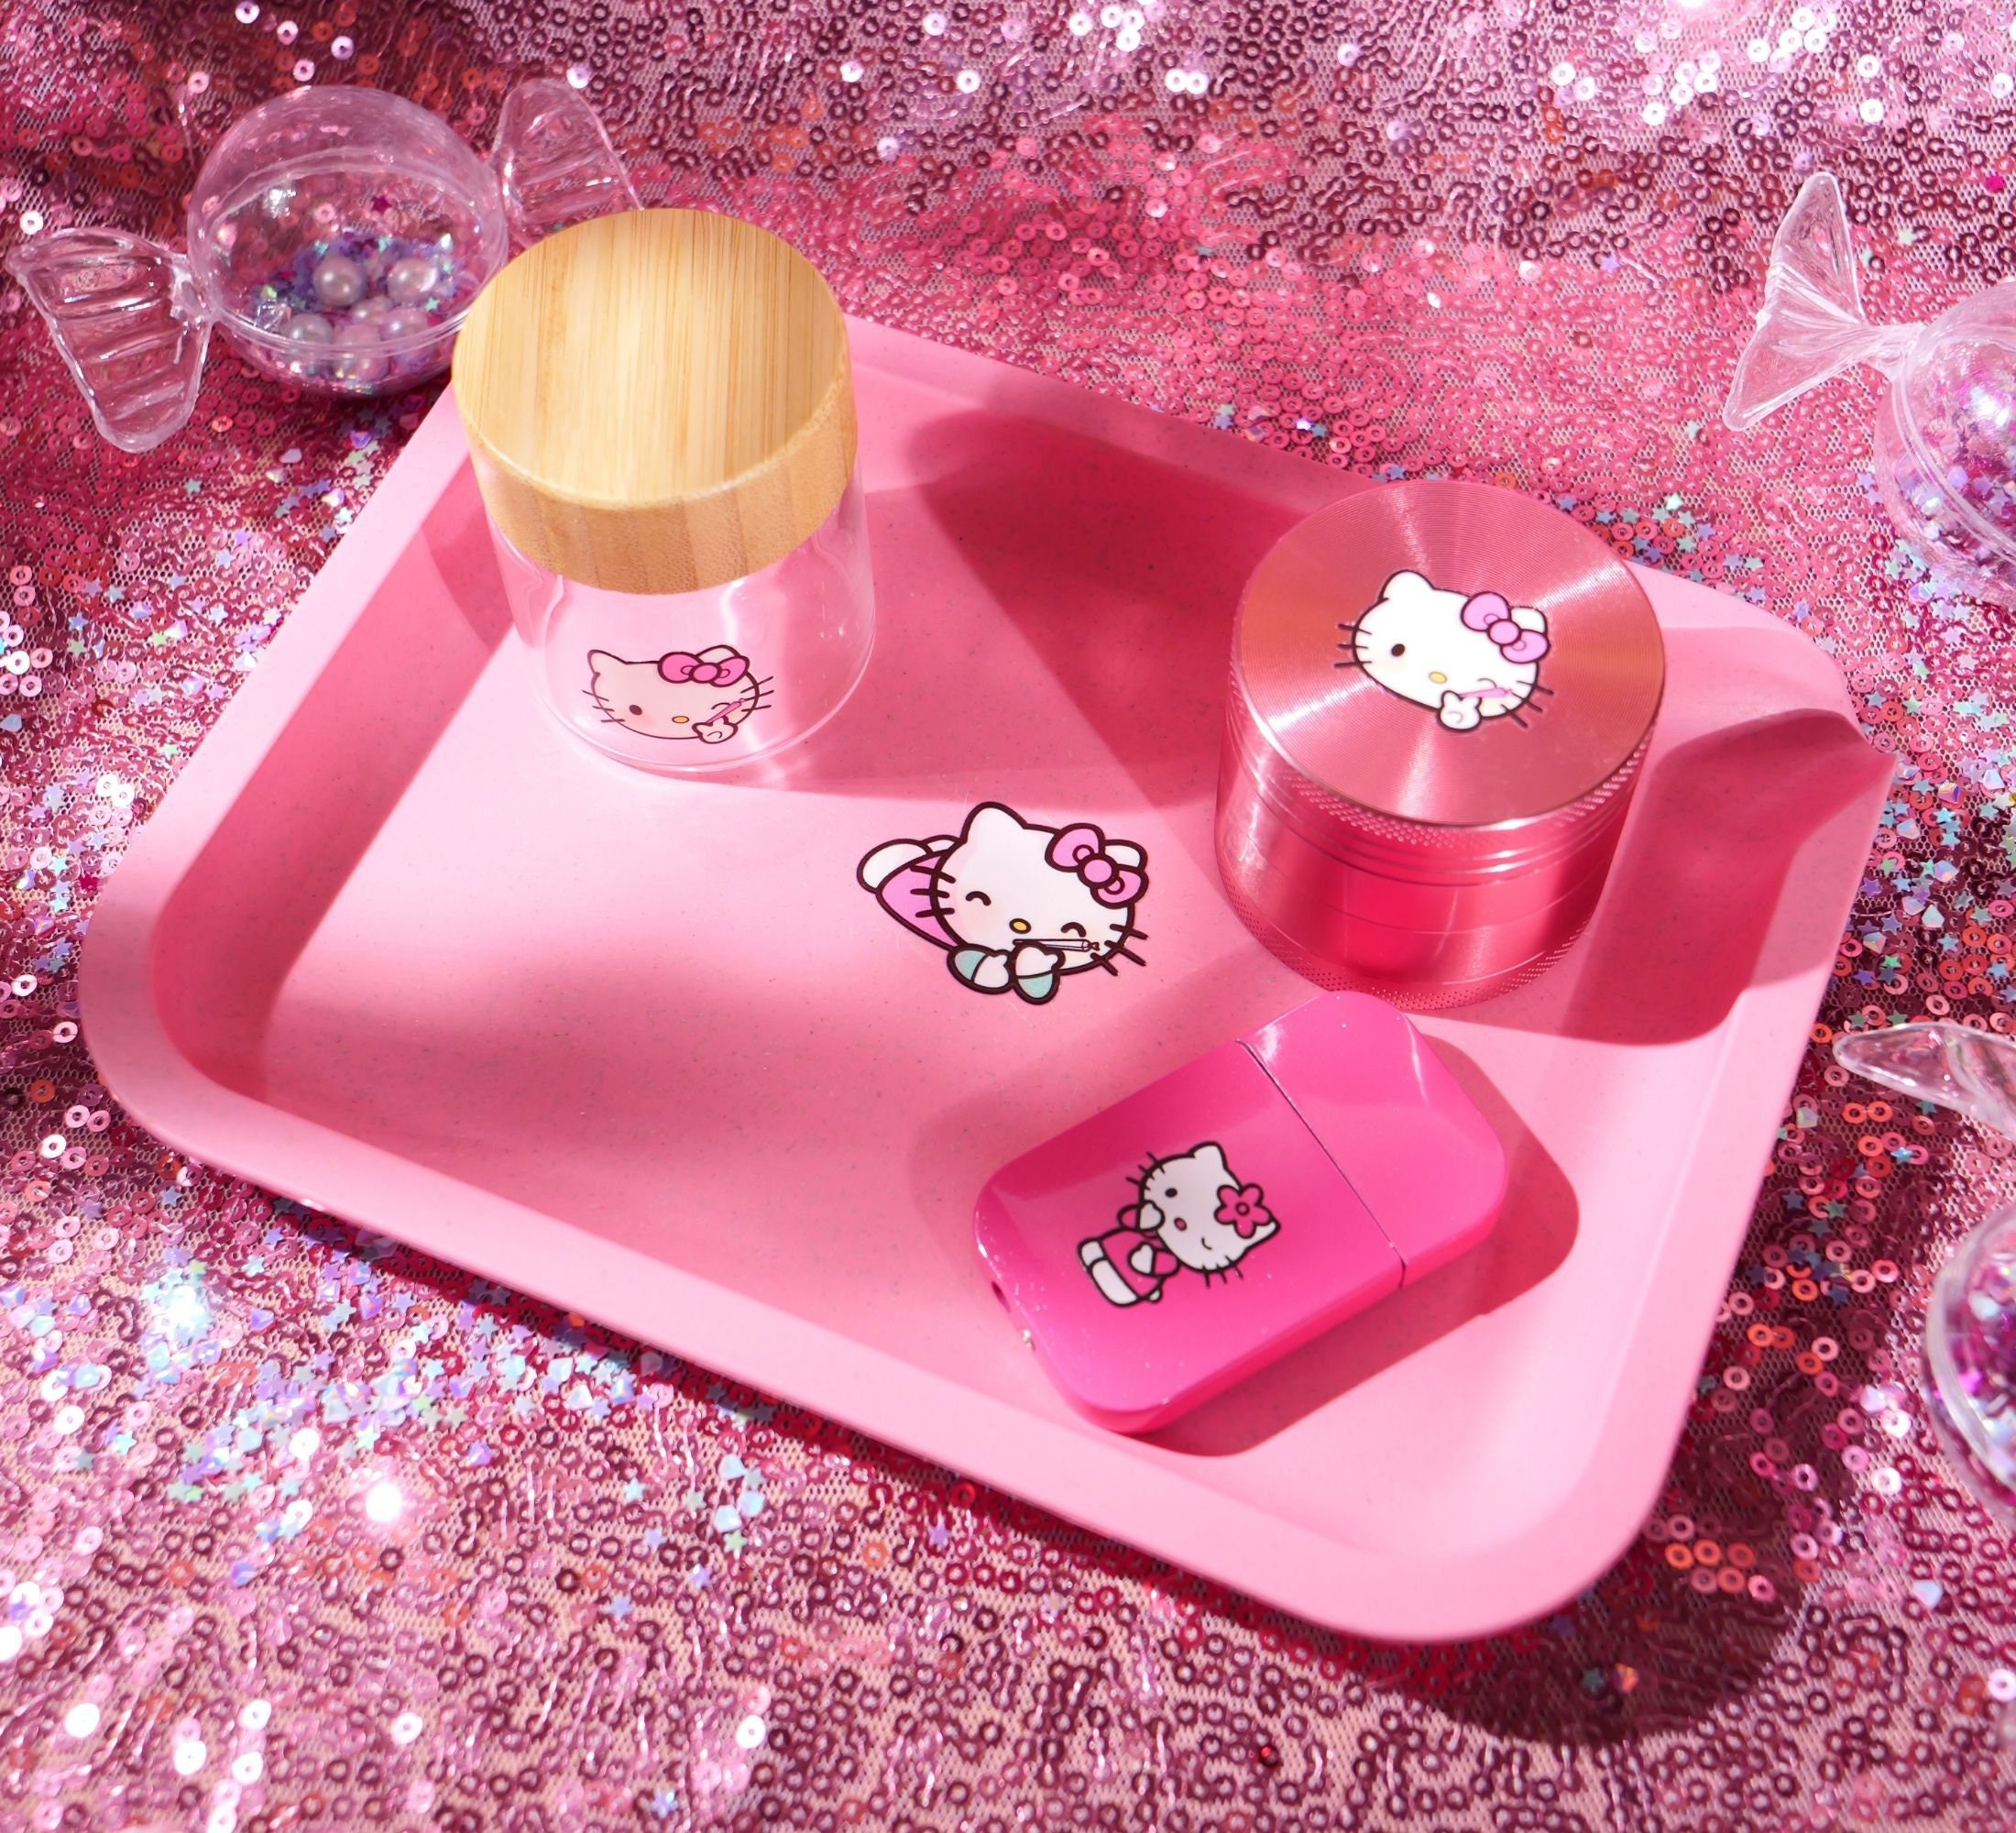 Hello Kitty Rolling Tray, Ashtray And Stash Jar Set!